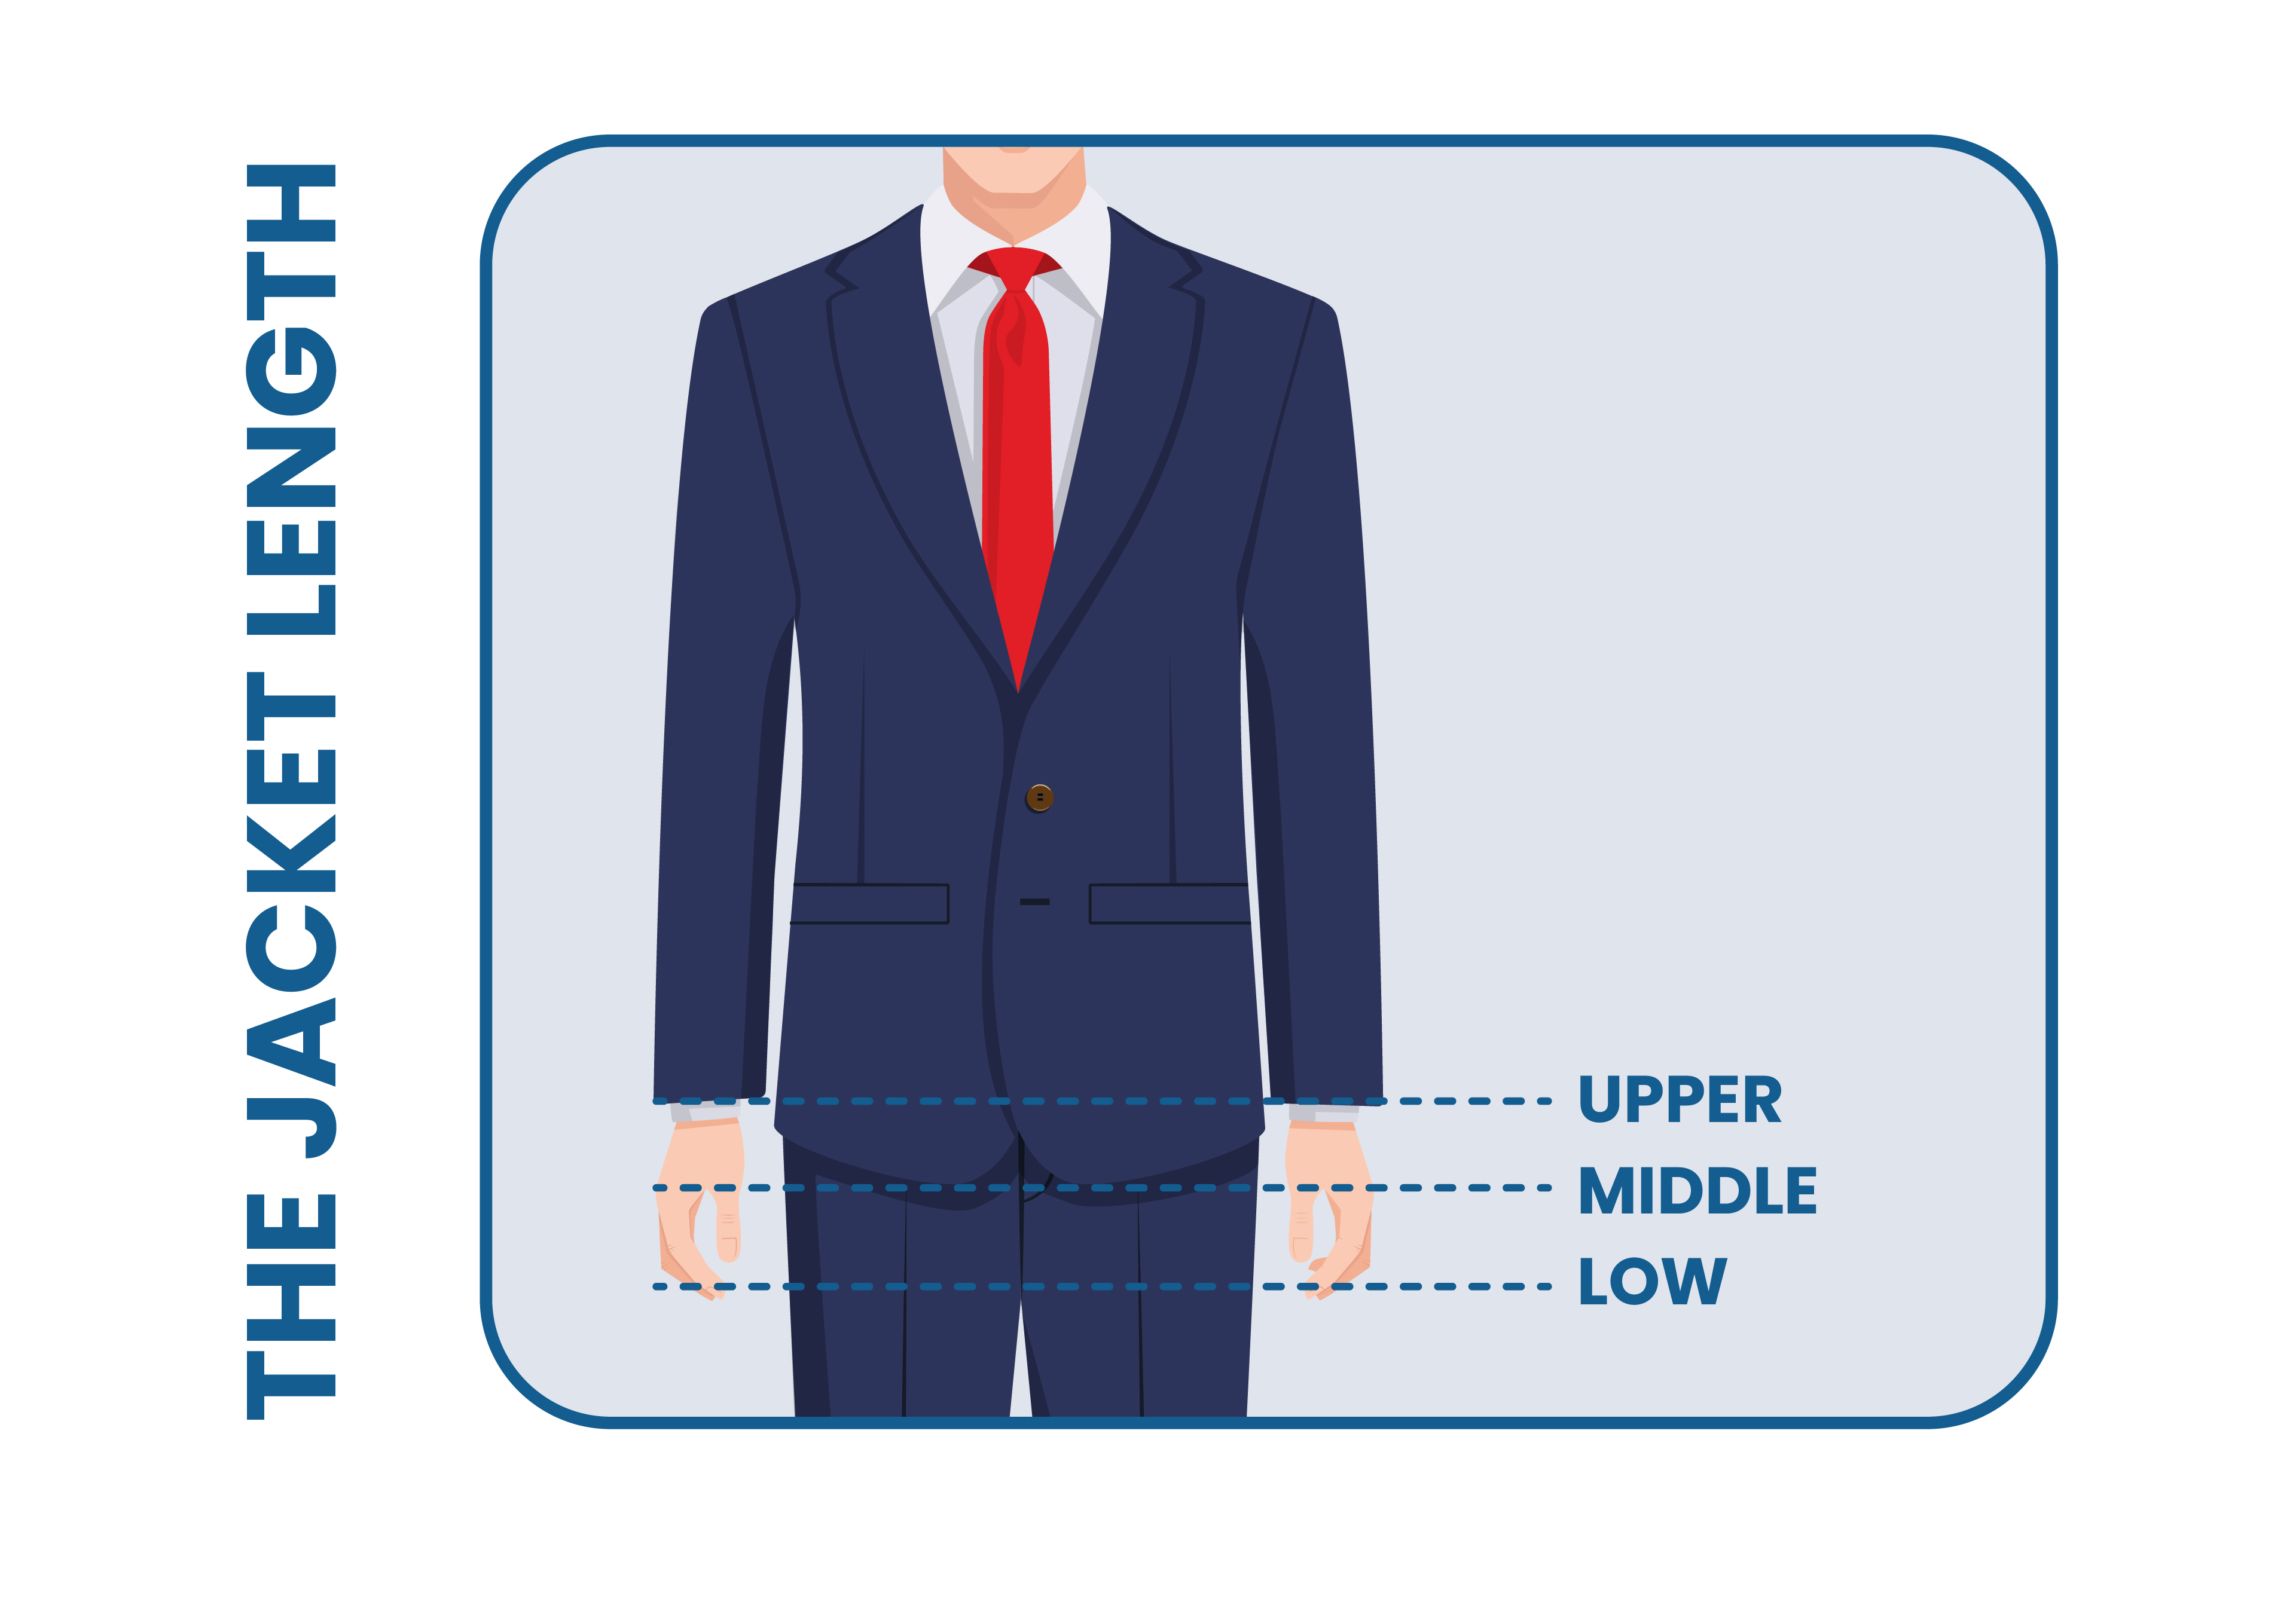 How to measure your Hosn – suit pants & jacket measurement guide